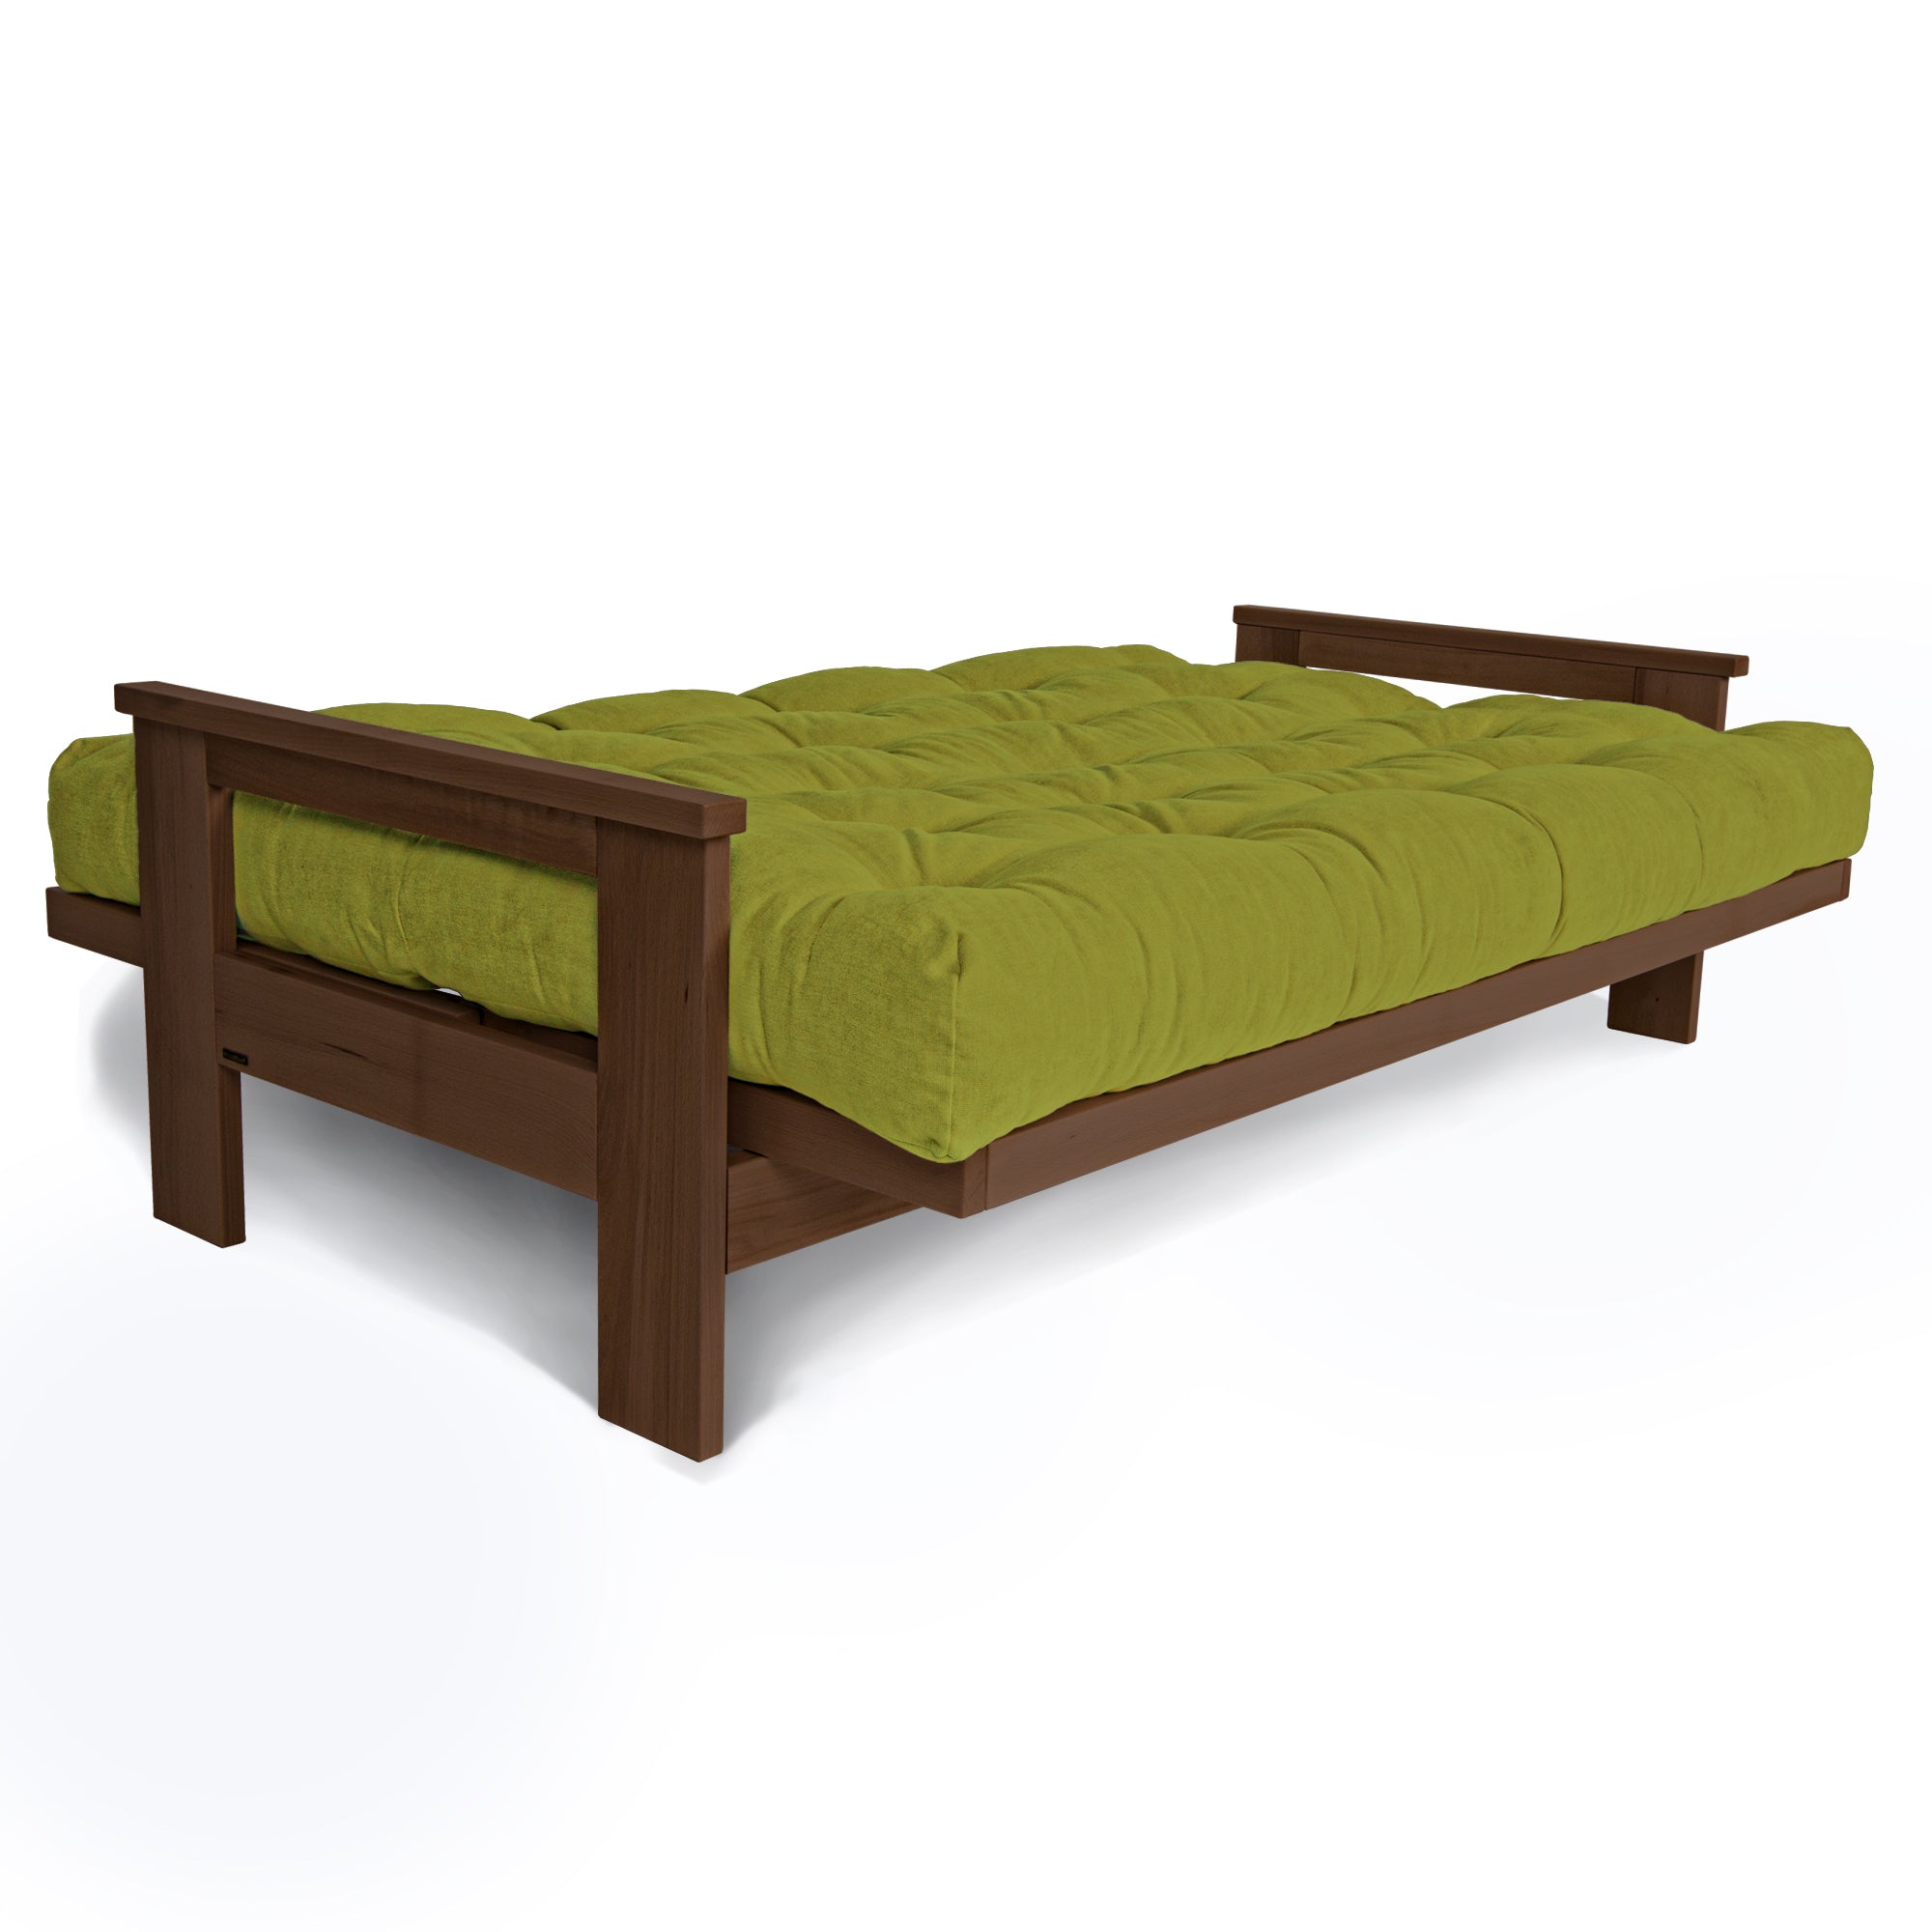 MEXICO Three-seat Futon Sofa Bed Solid Hardwood, Brown Colour